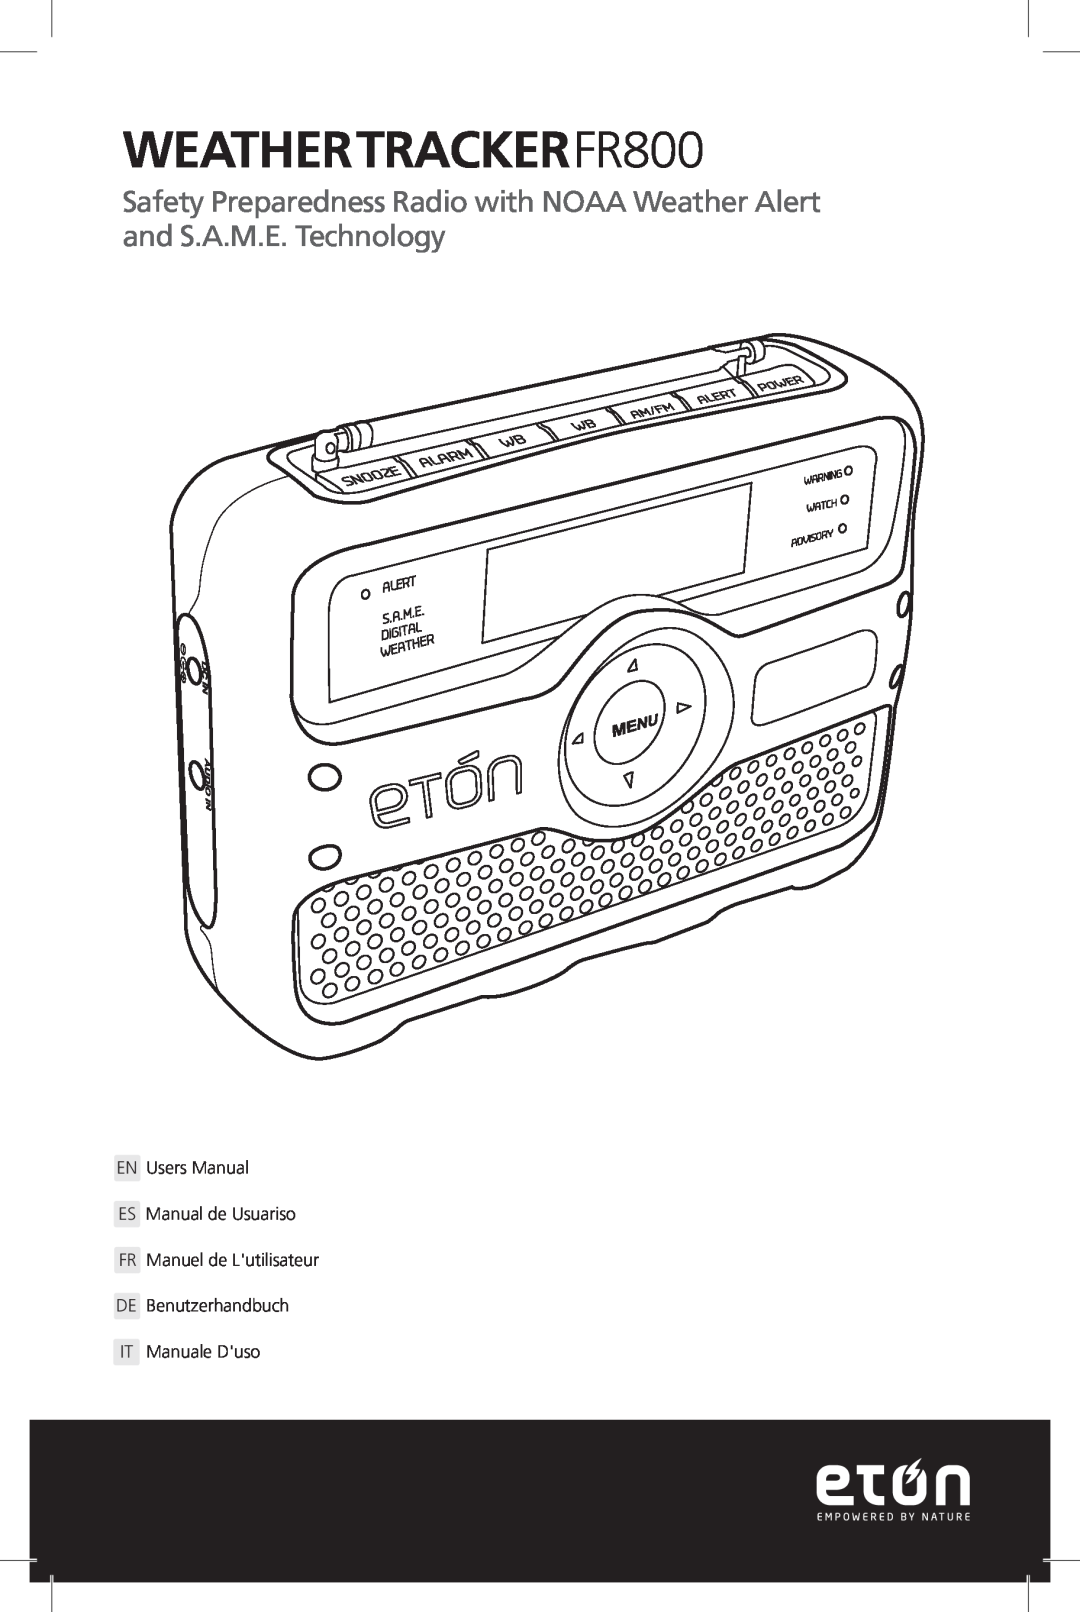 Eton user manual WEATHERTRACKERFR800, IT Manuale Duso 